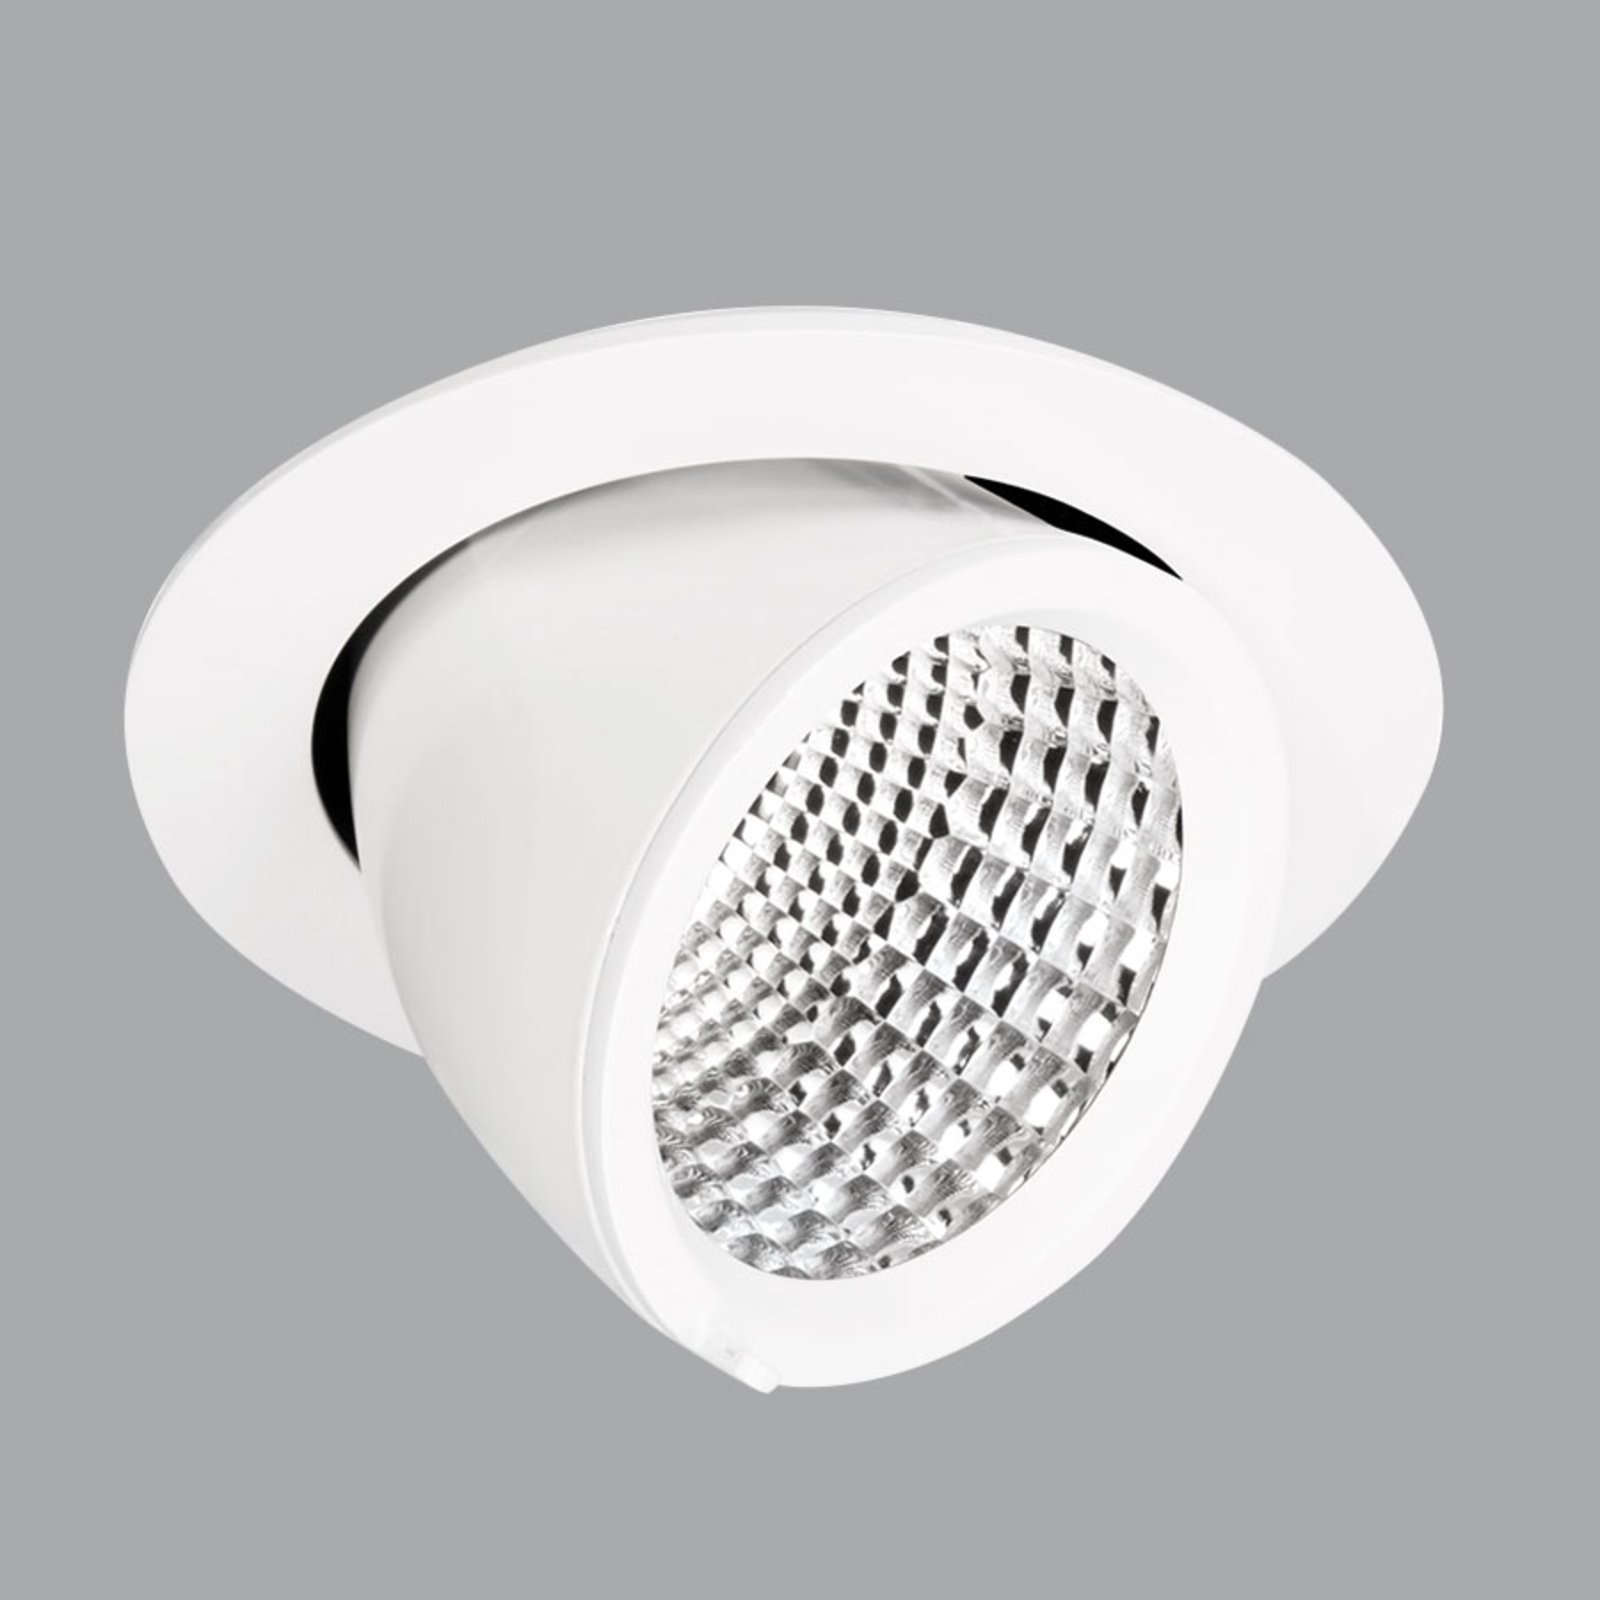 Spot reflector - EB433 downlight LED white 4,000 K